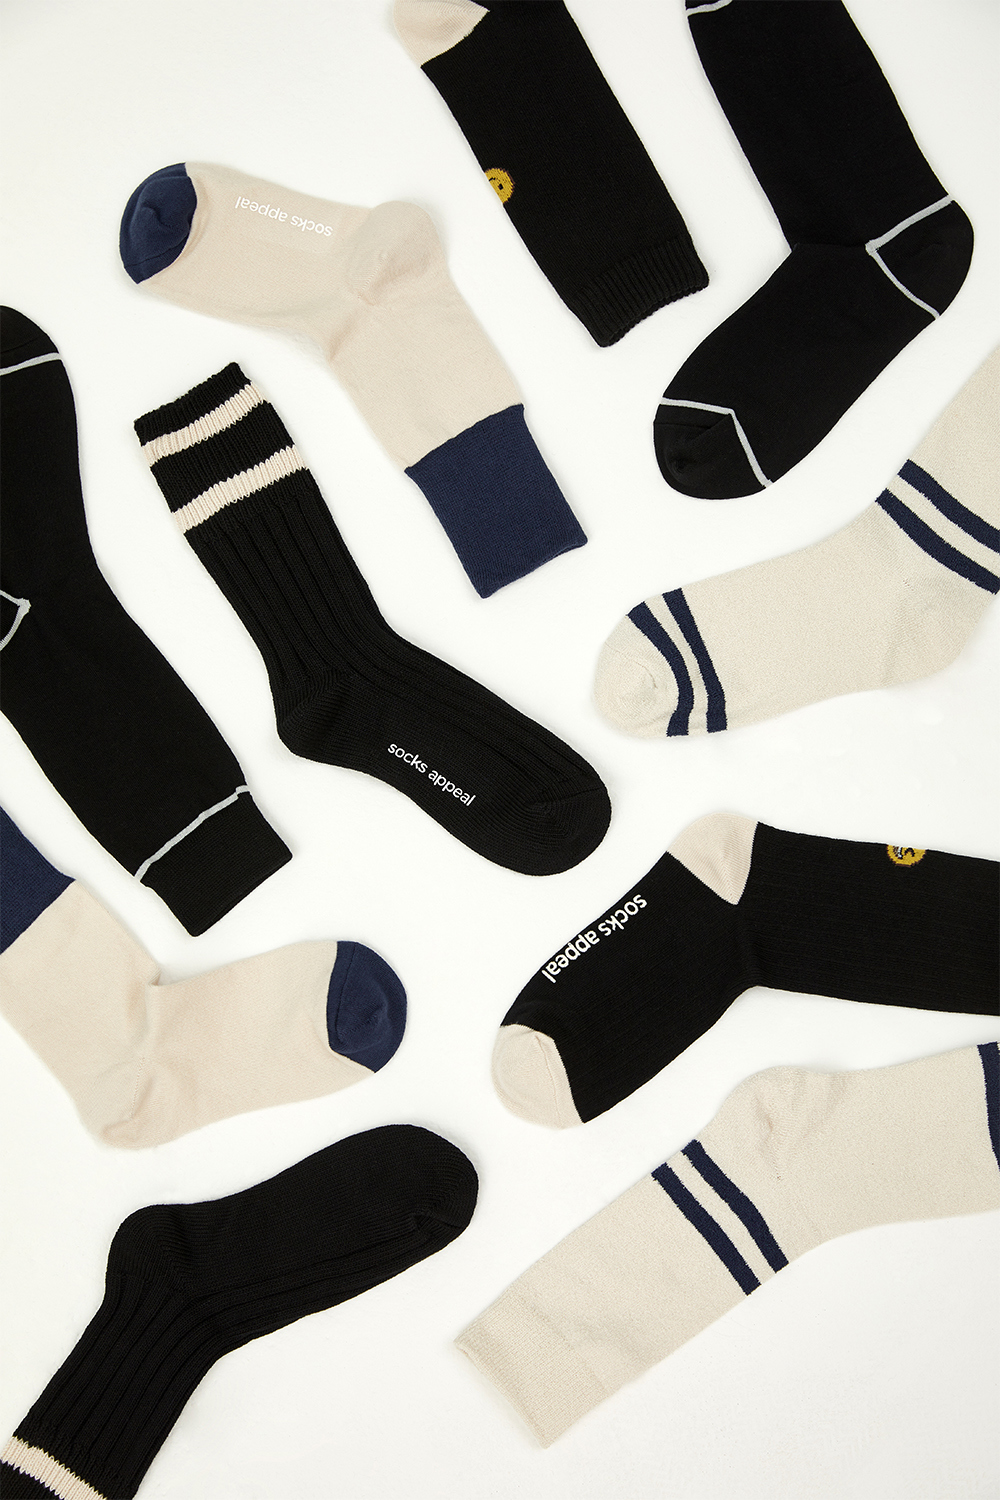 socks detail image-S1L51